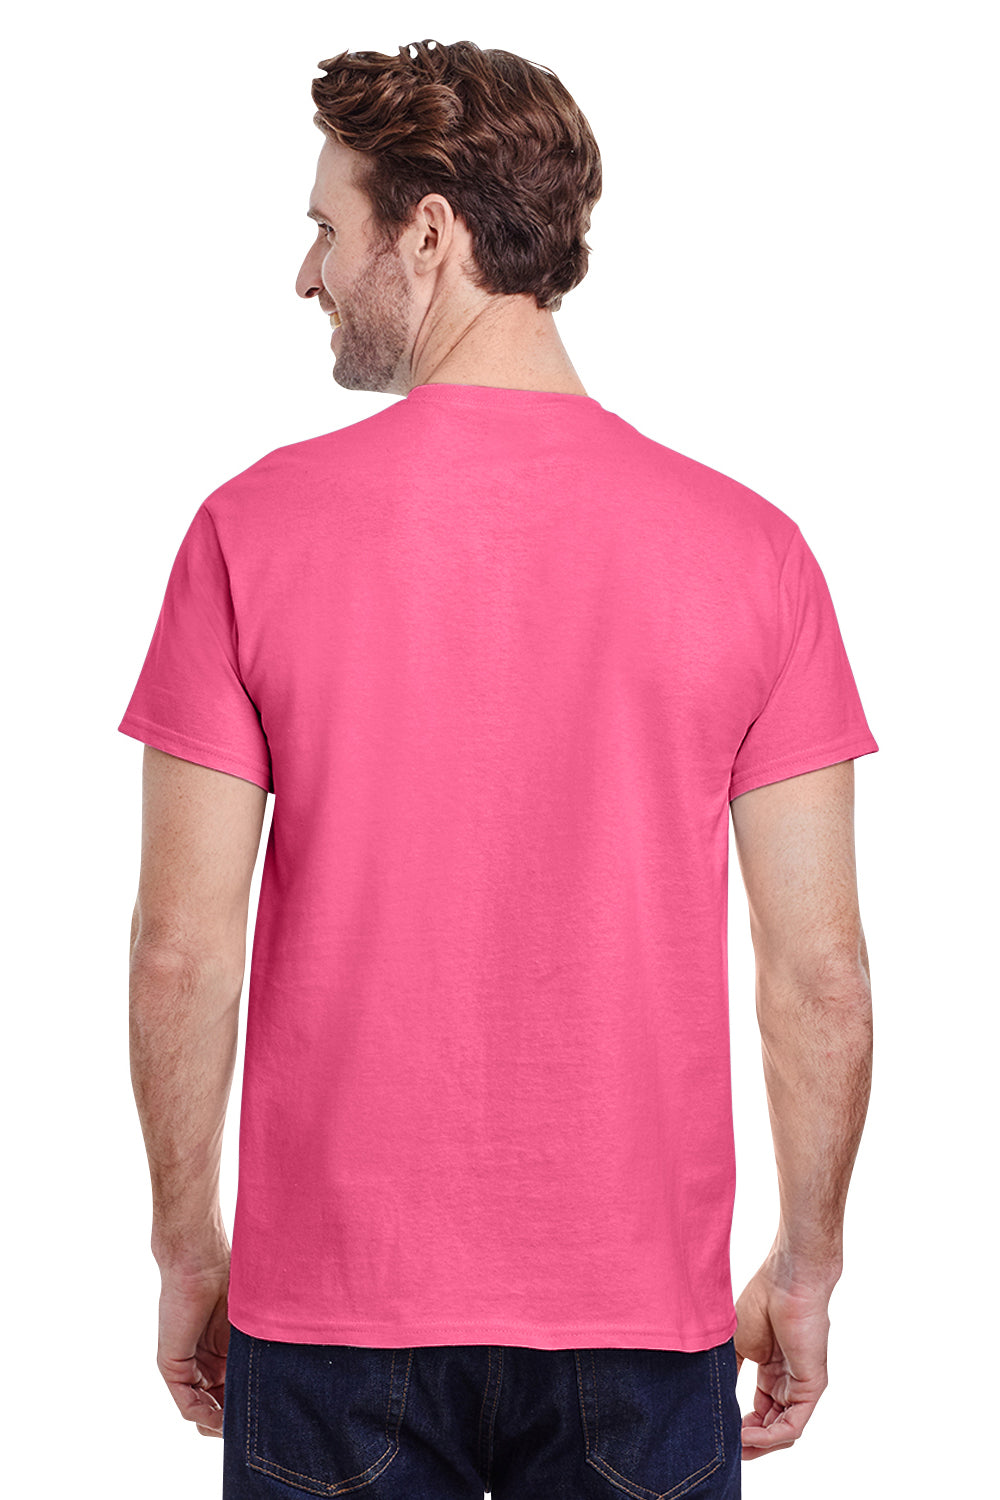 Gildan G500 Mens Short Sleeve Crewneck T-Shirt Safety Pink Back